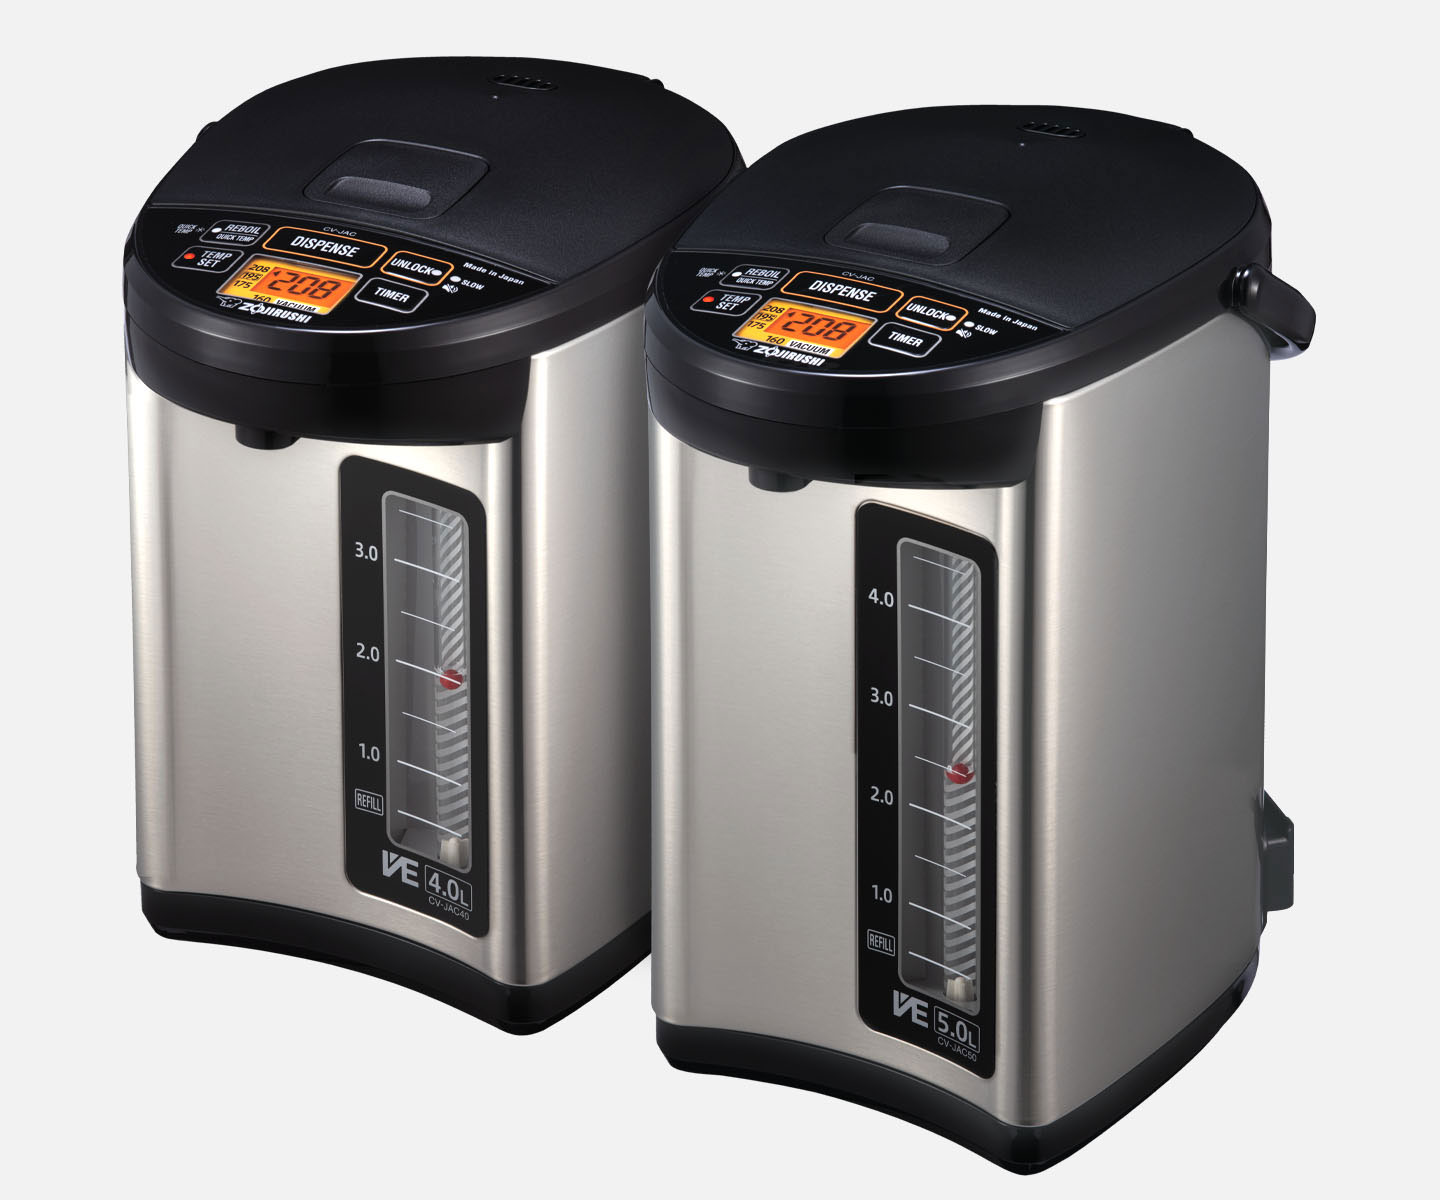 Get Zojirushi Hybrid Water Boiler and Warmer, 4-Liter, Stainless Dark Brown  Delivered